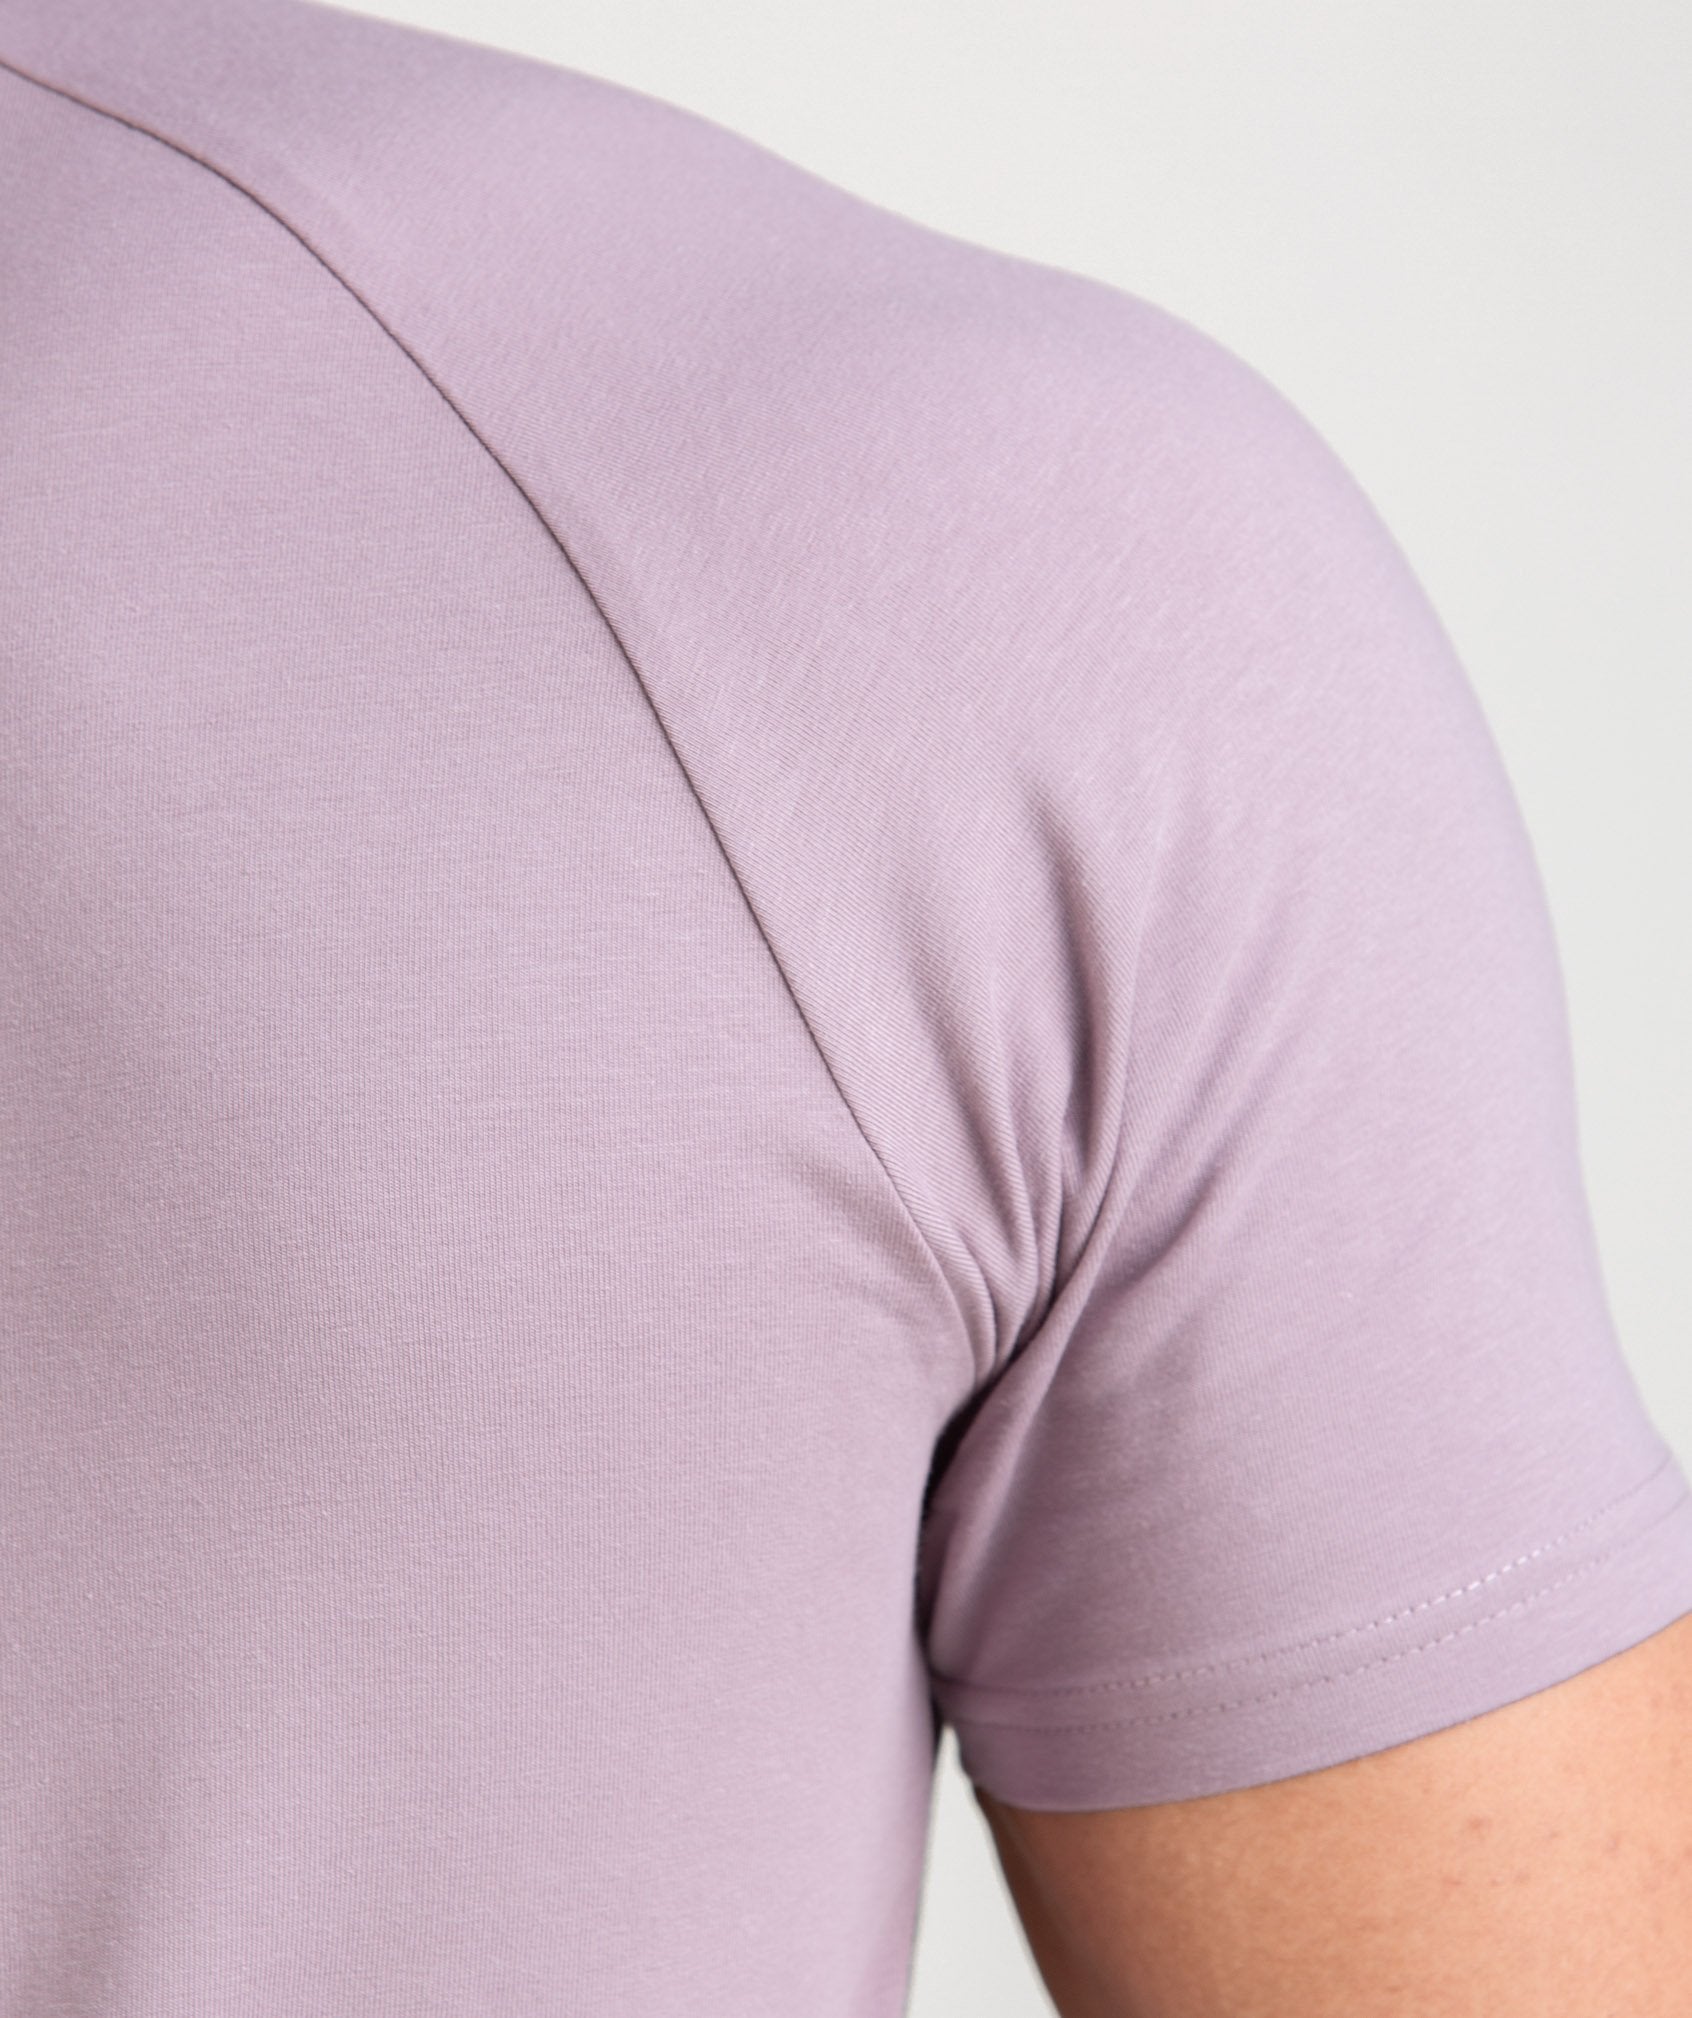 Gymshark Apollo T-Shirt - Purple Chalk/White 